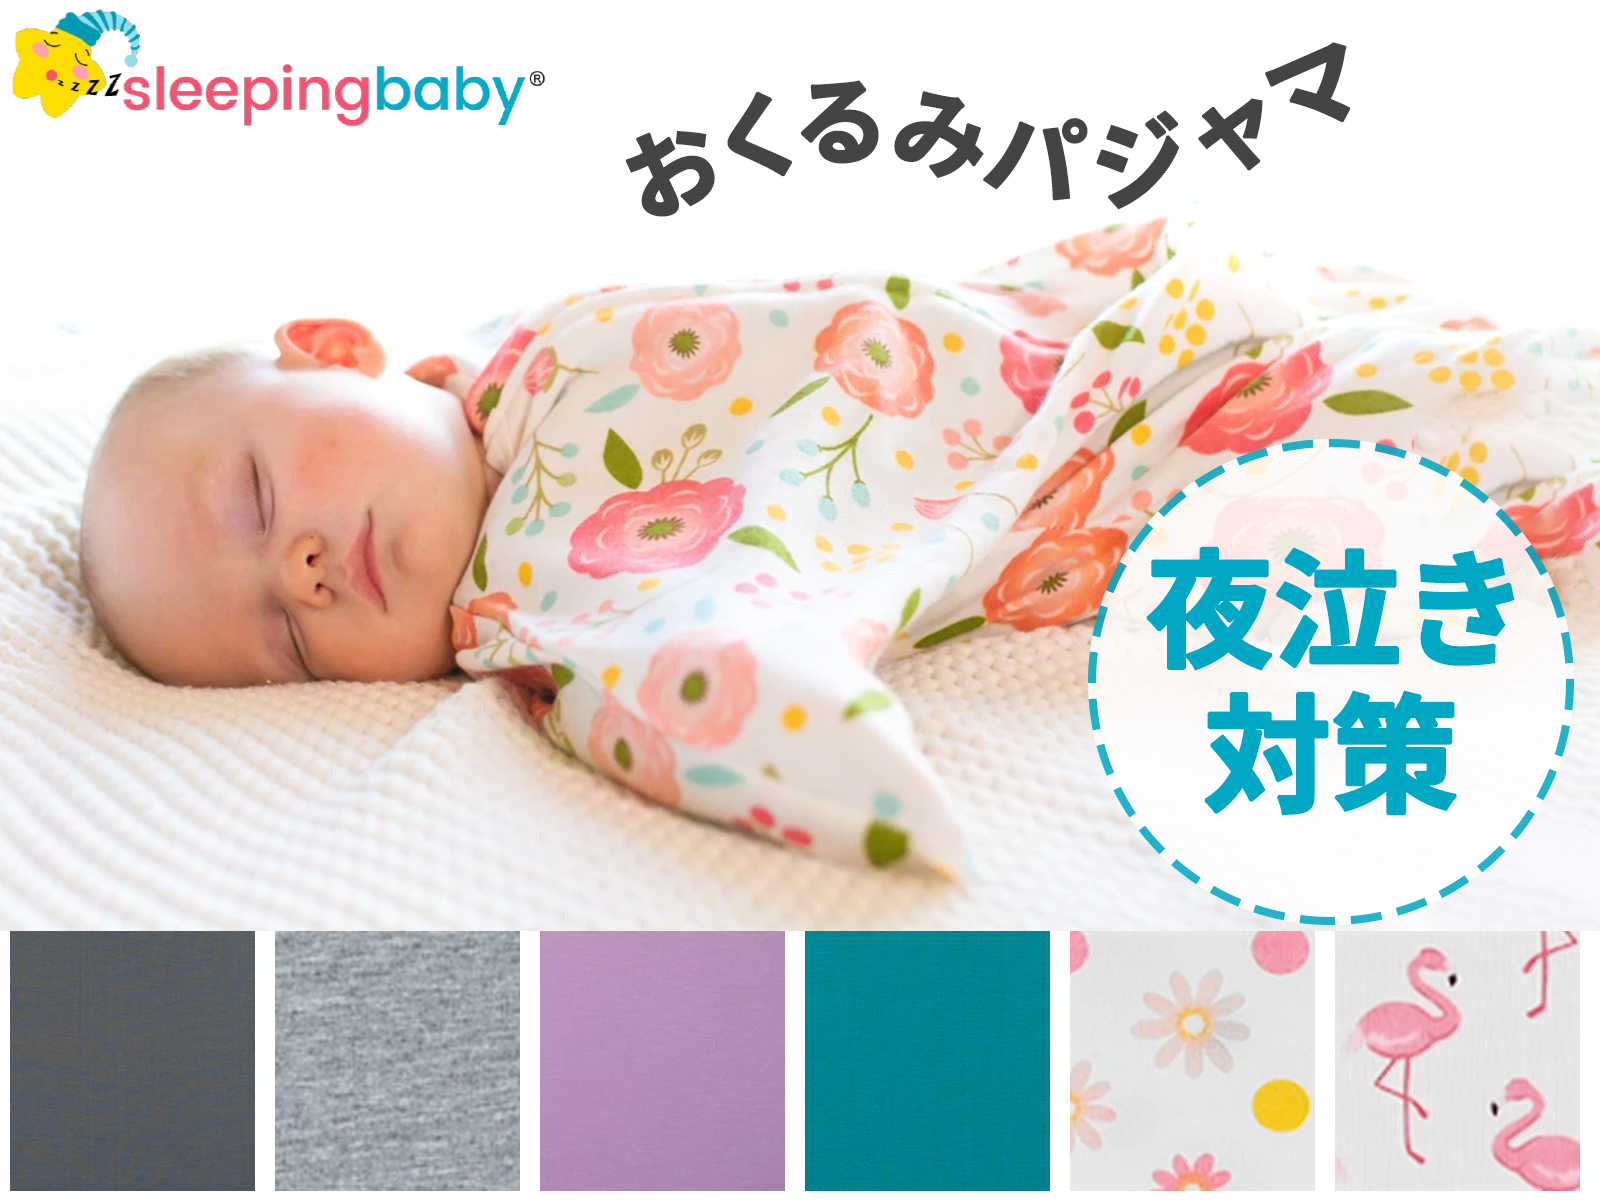 Humble Bunny case study for Sleeping Baby Japan e-commerce Rakuten top image